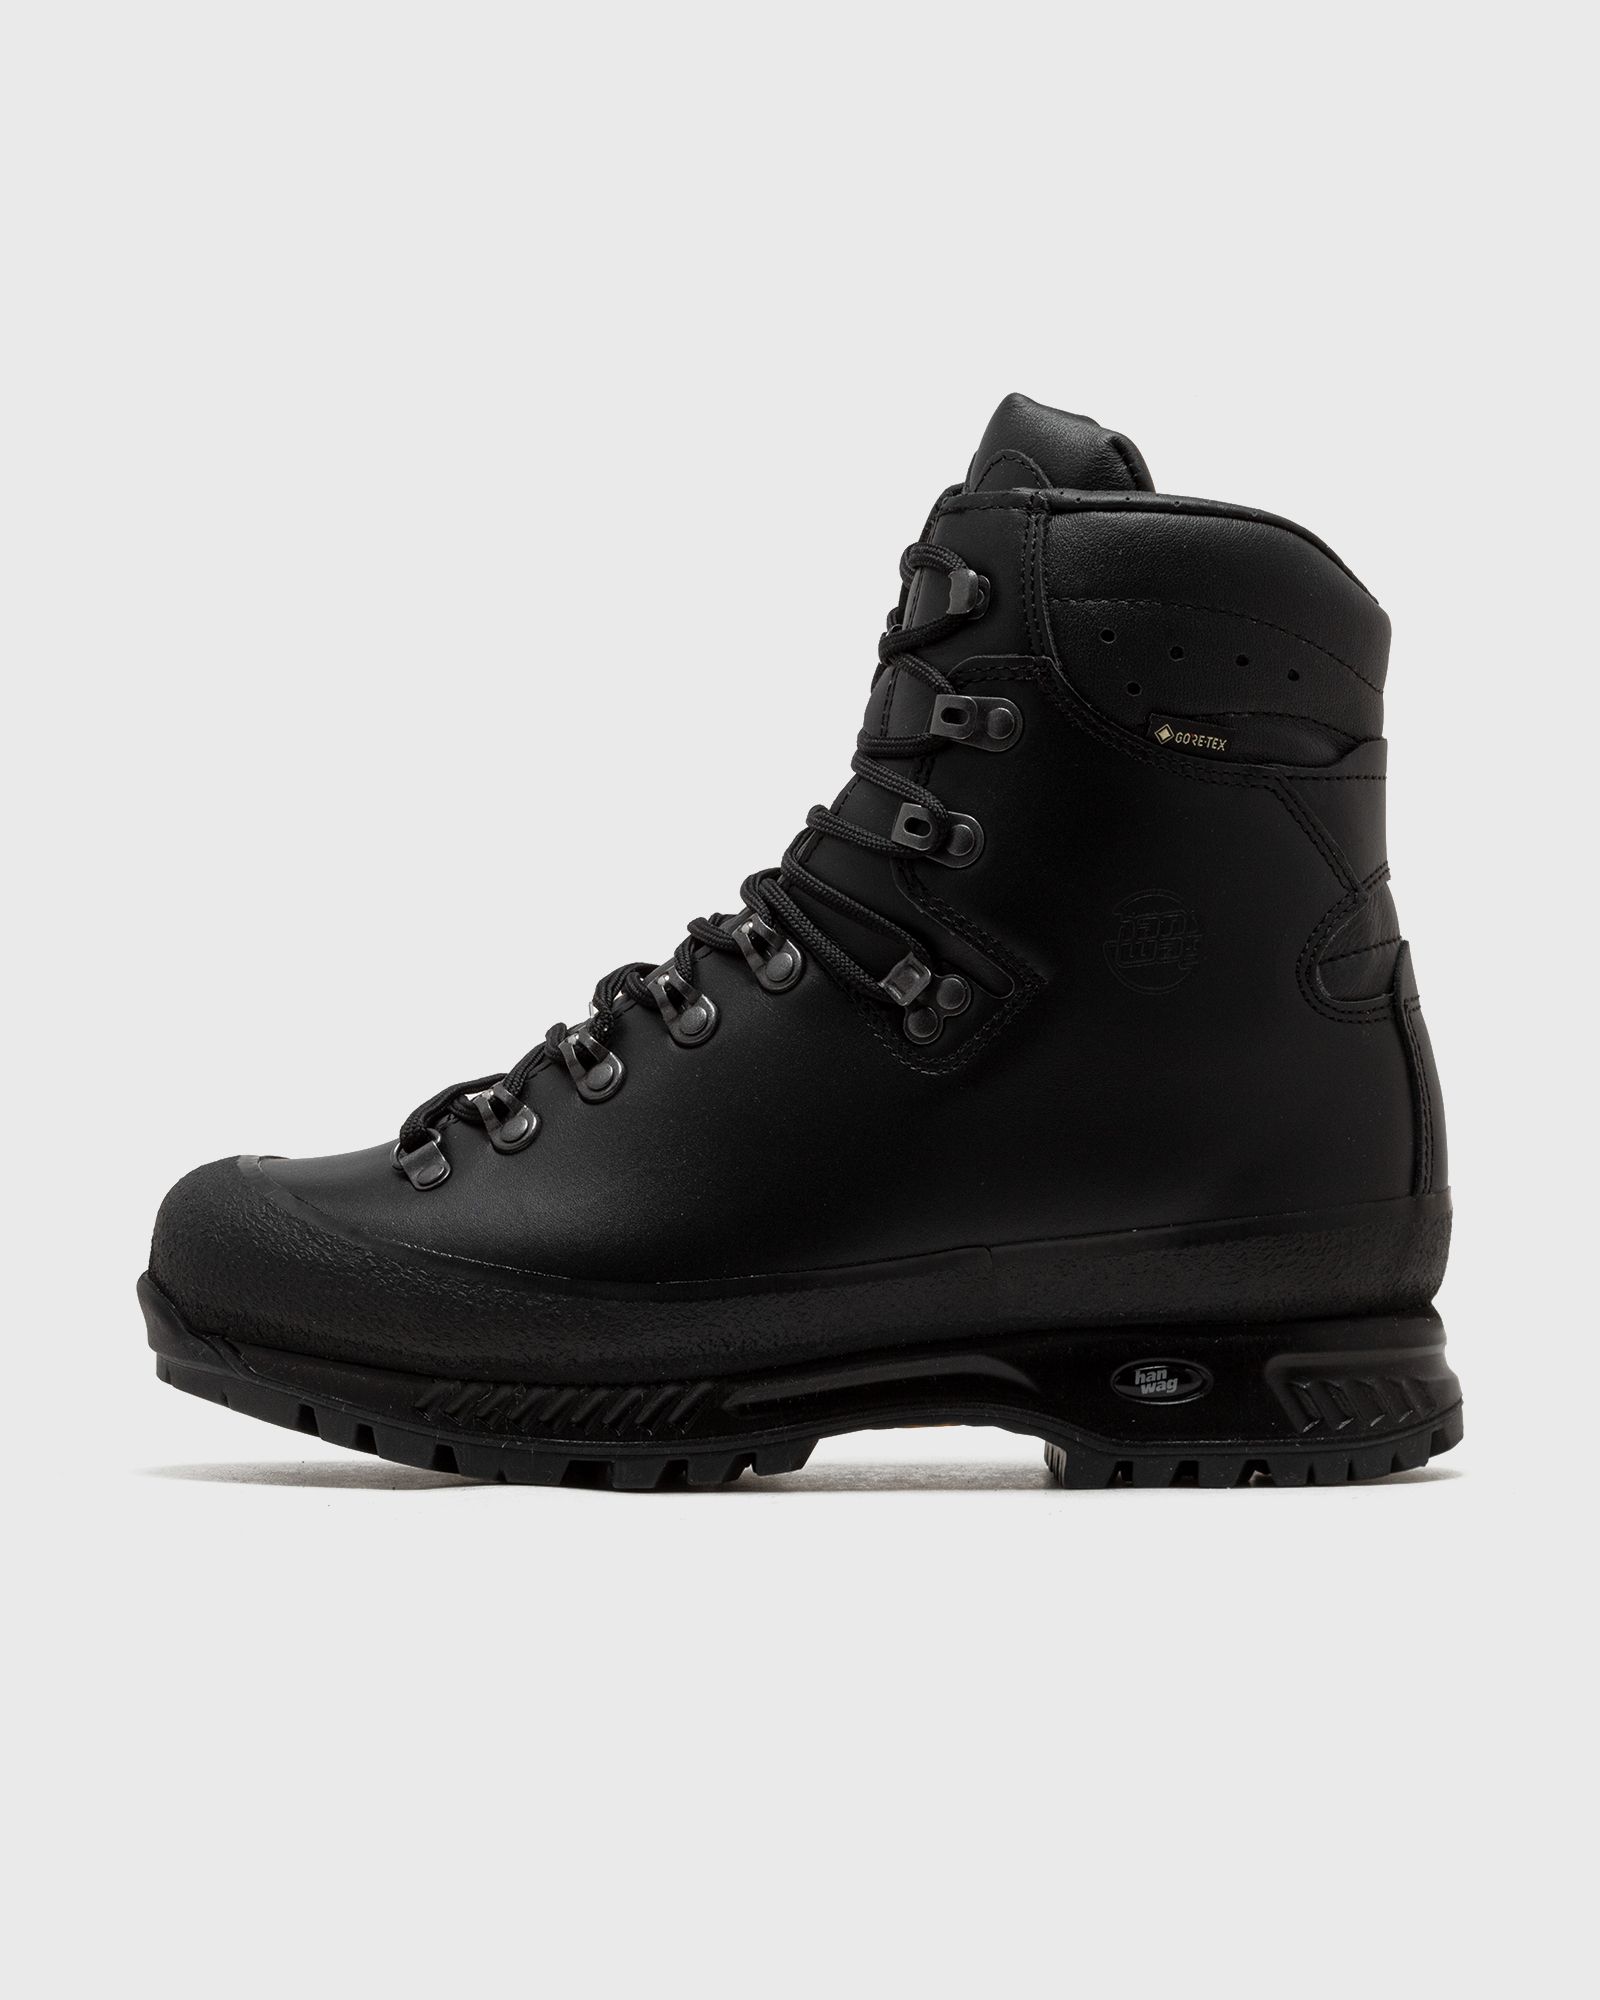 Hanwag - alaska gtx men boots black in größe:45